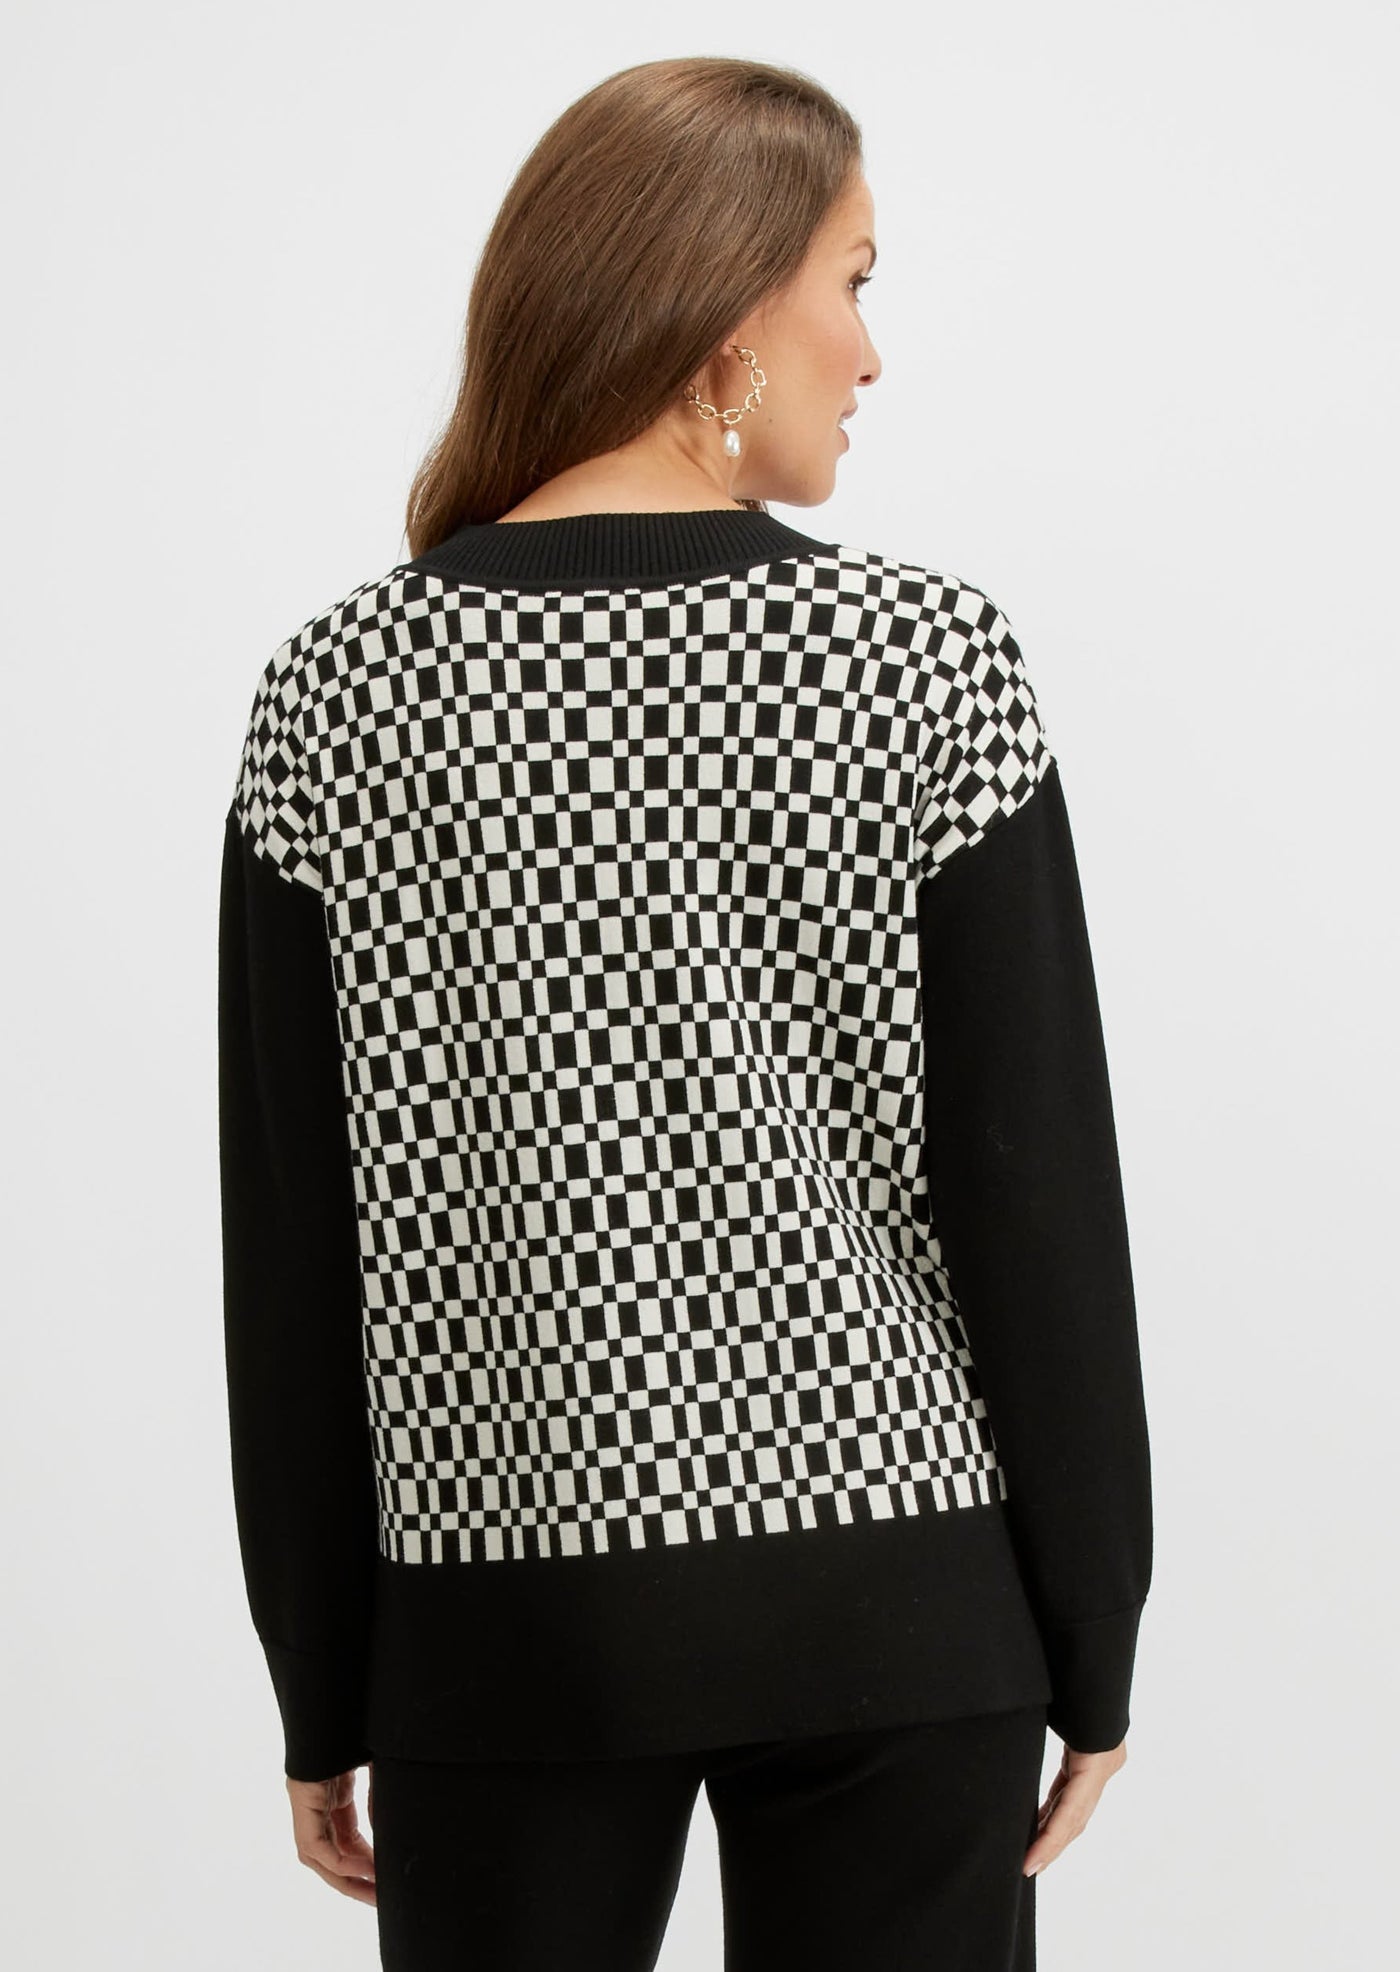 Emproved - Checkered V-Neck Sweater